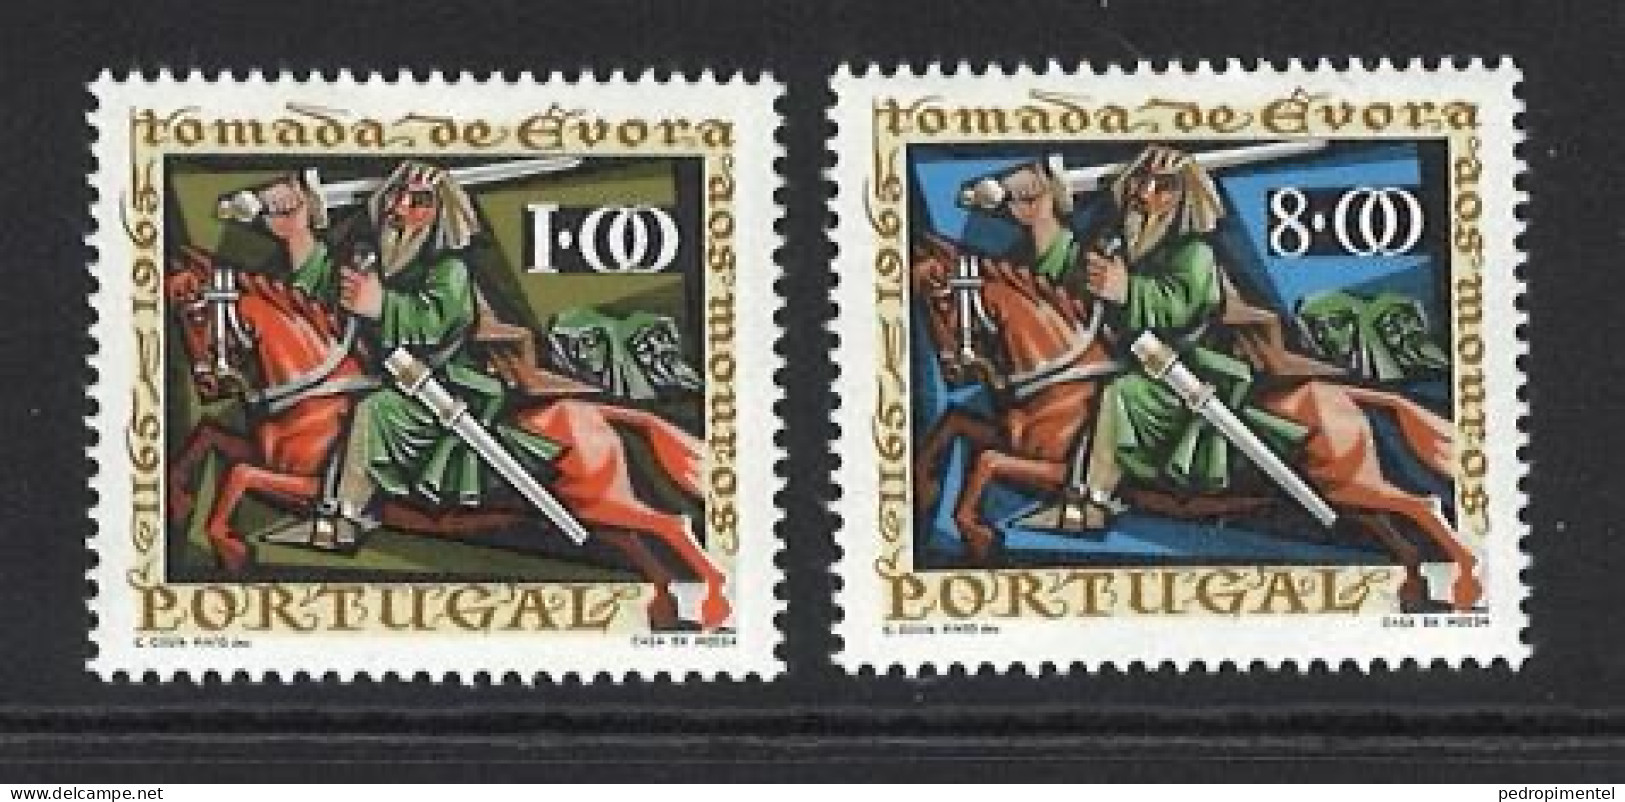 Portugal Stamps 1966 "Conquest Of Evora" Condition MHH #977-978 - Nuevos